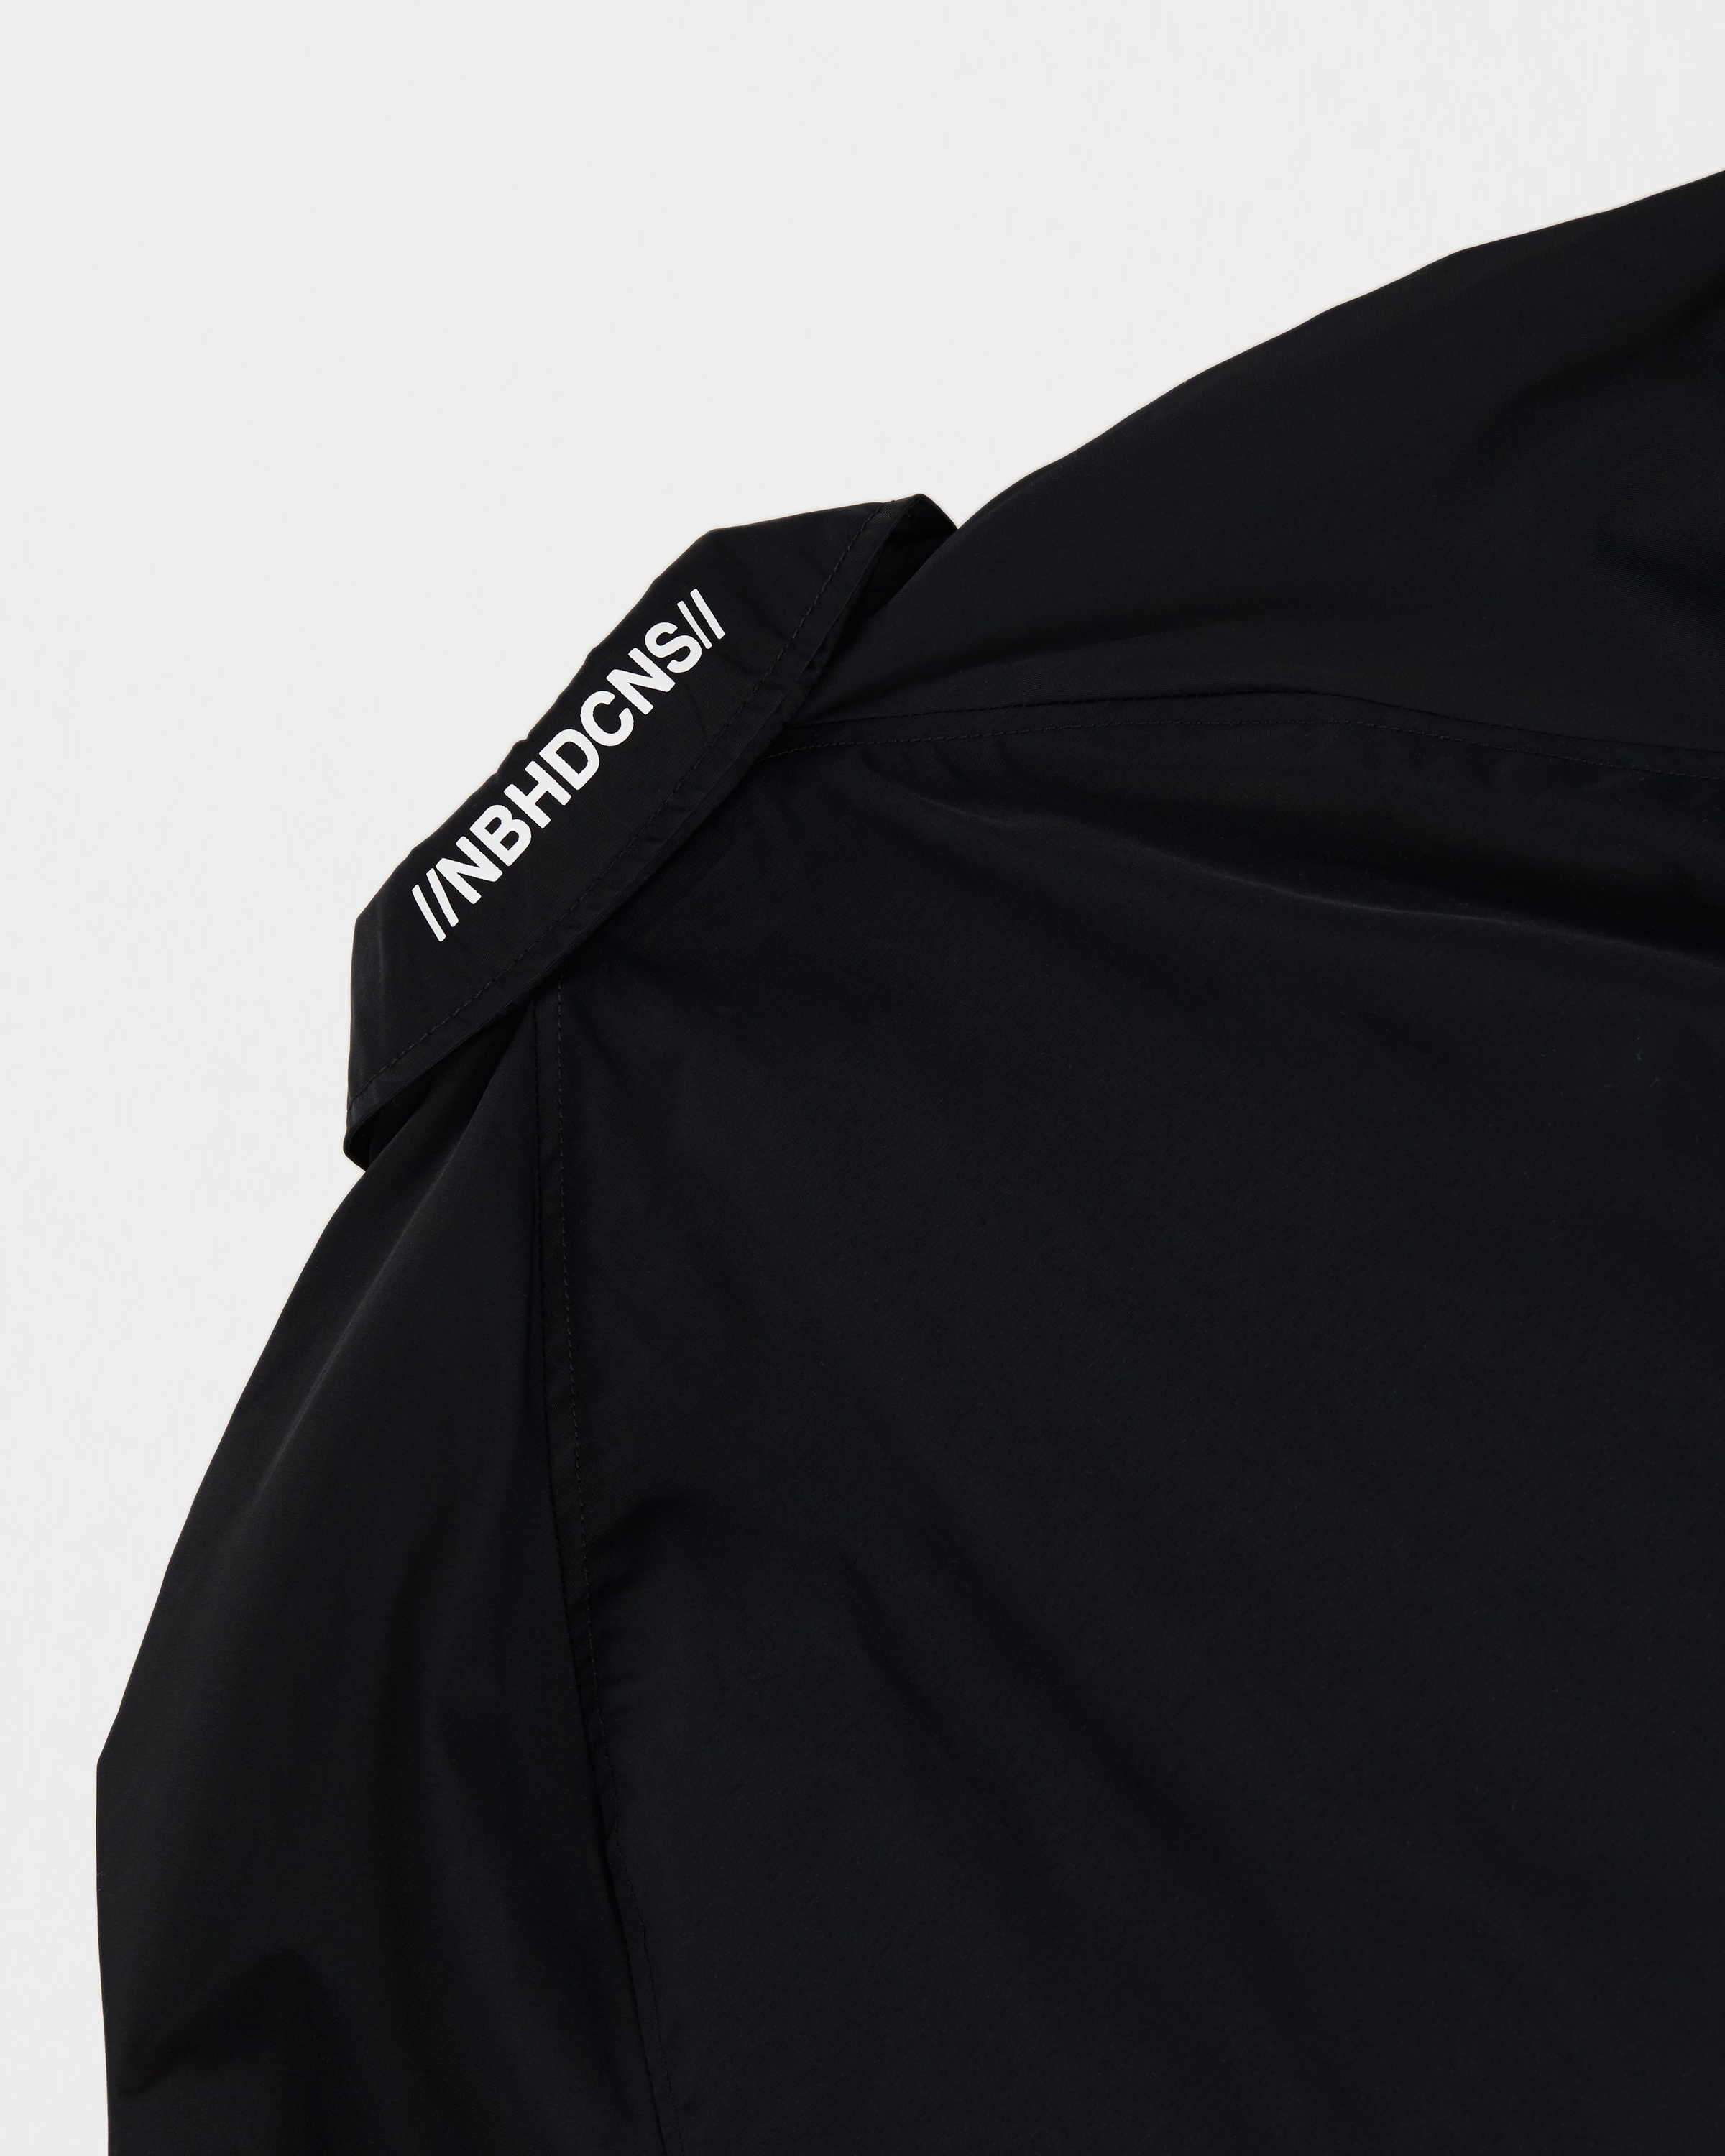 Converse x NBHD – Black Coaches Jacket - Outerwear - Black - Image 4